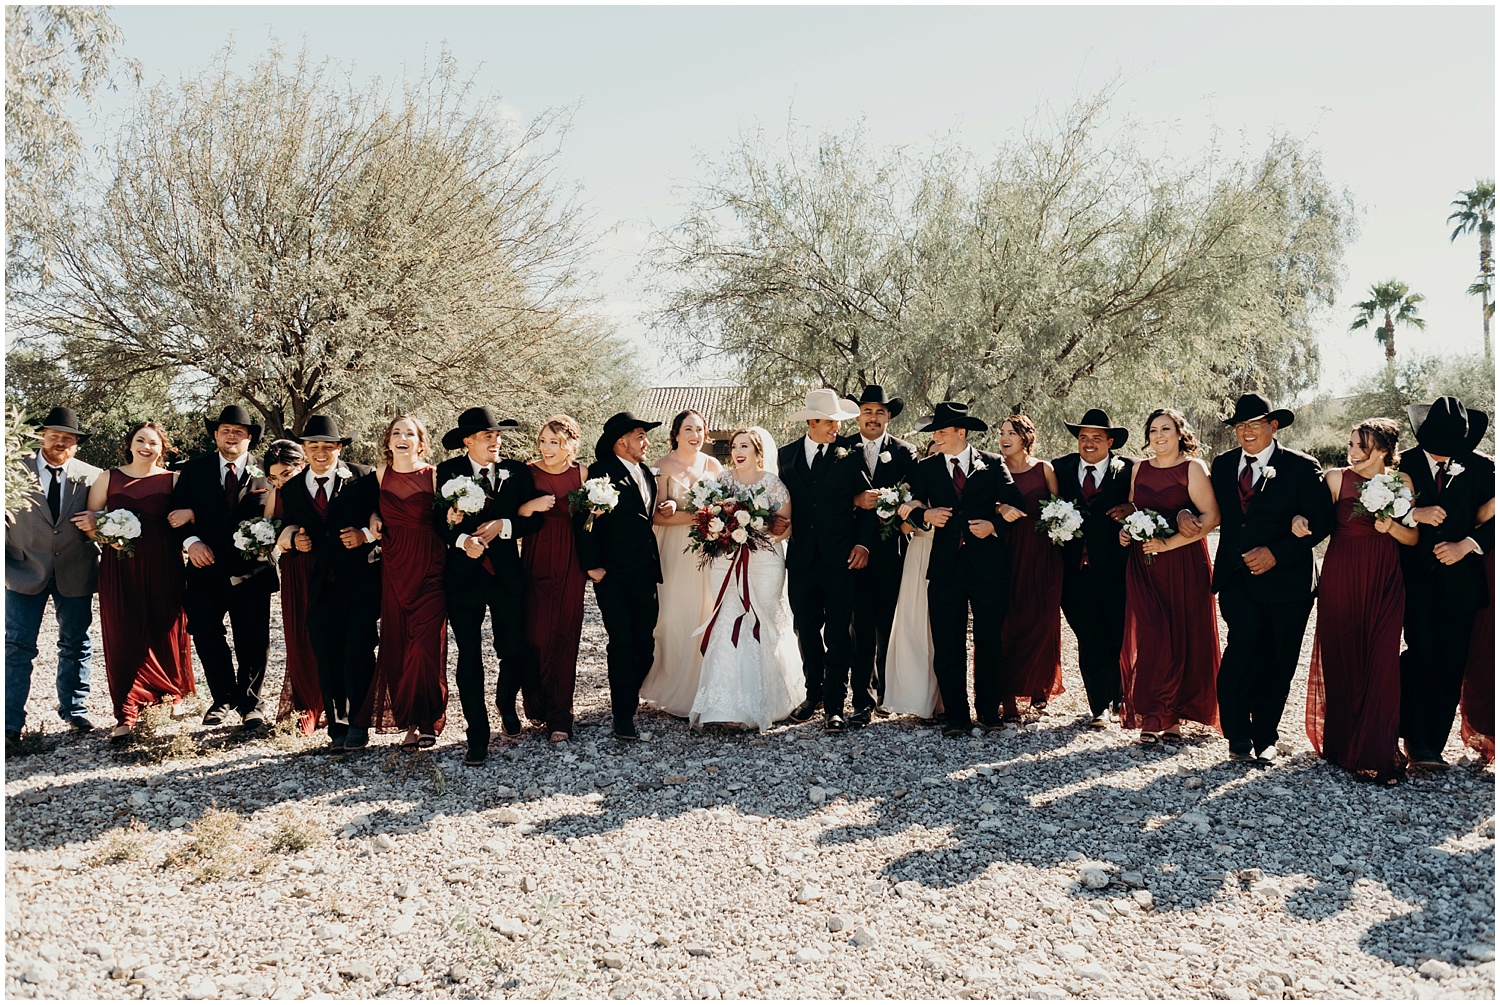 Documenting a couple's wedding day through photojournalism in Casa Grande, Arizona.